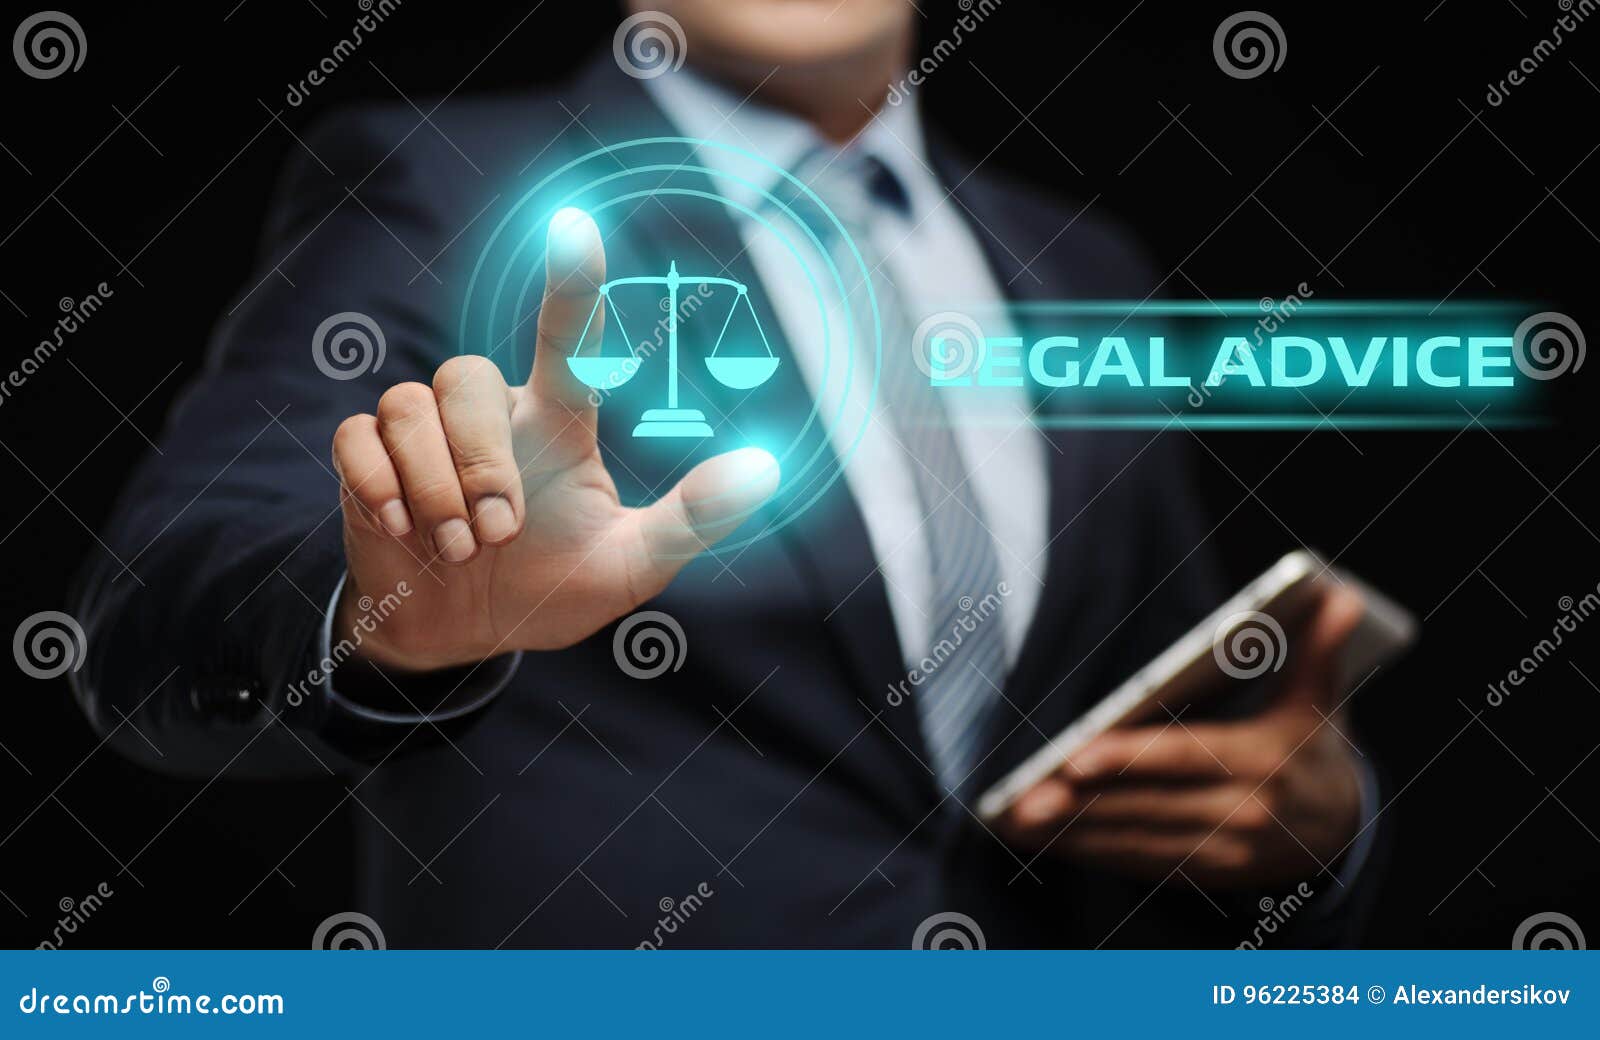 legal advice law expert business internet concept